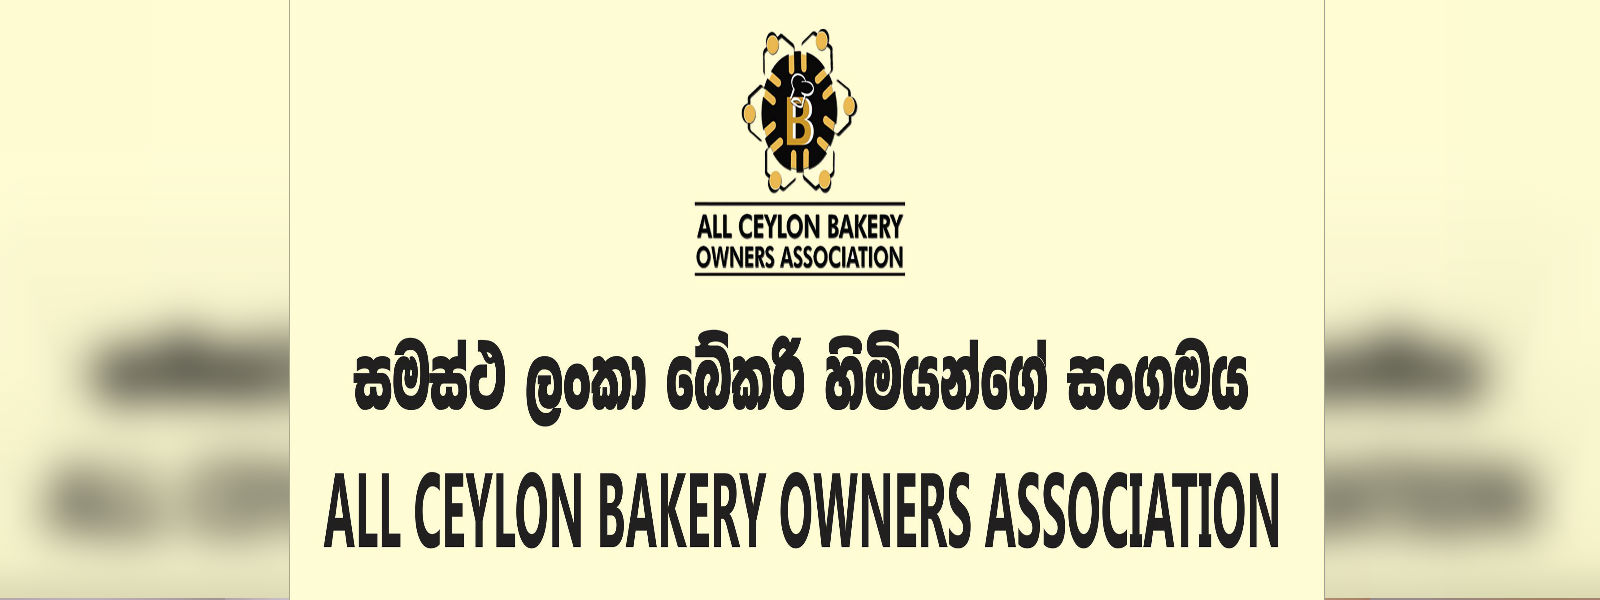 All Ceylon Bakery Owners Association to convene regarding wheat prices